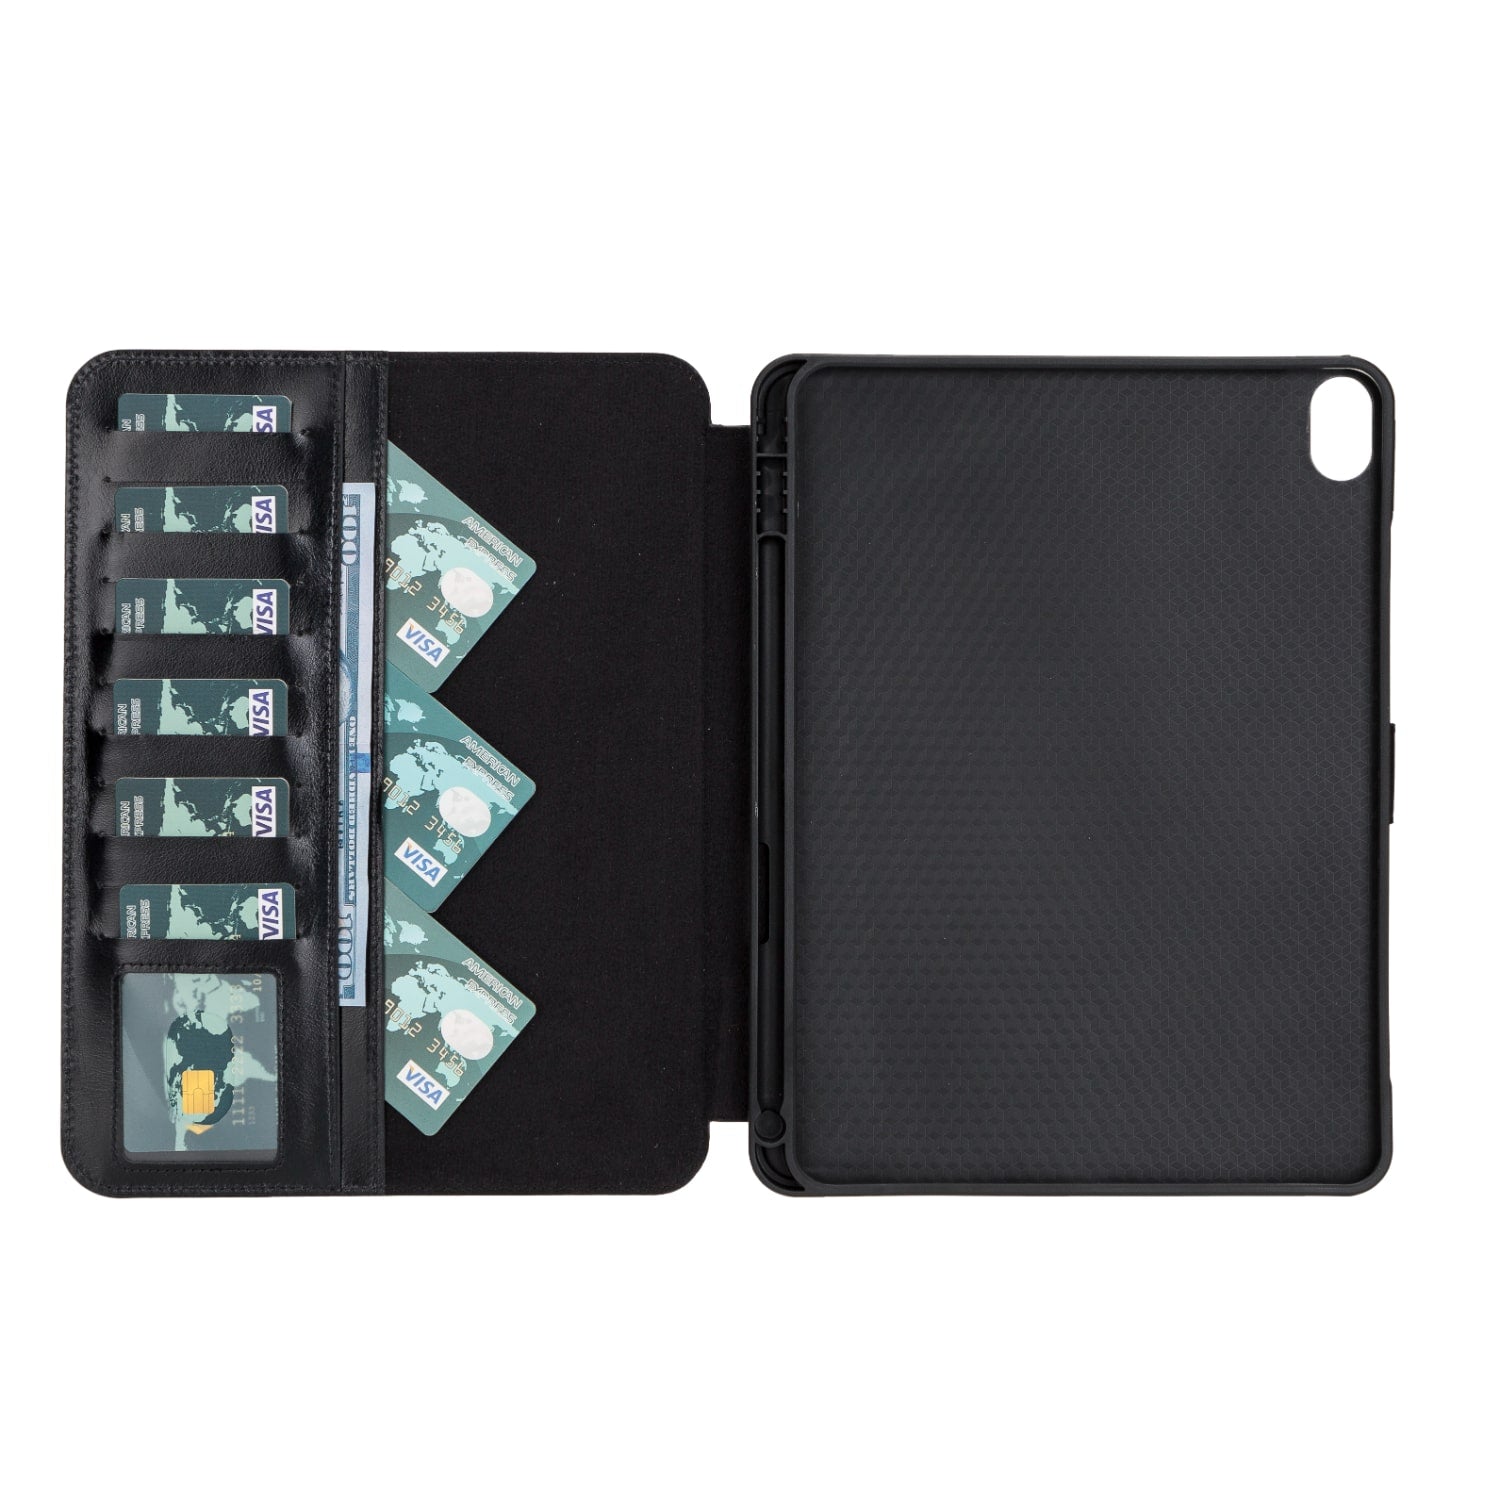 Black Leather iPad Air 10.9 Inc Smart Folio Case with Apple Pen Holder - Bomonti - 2